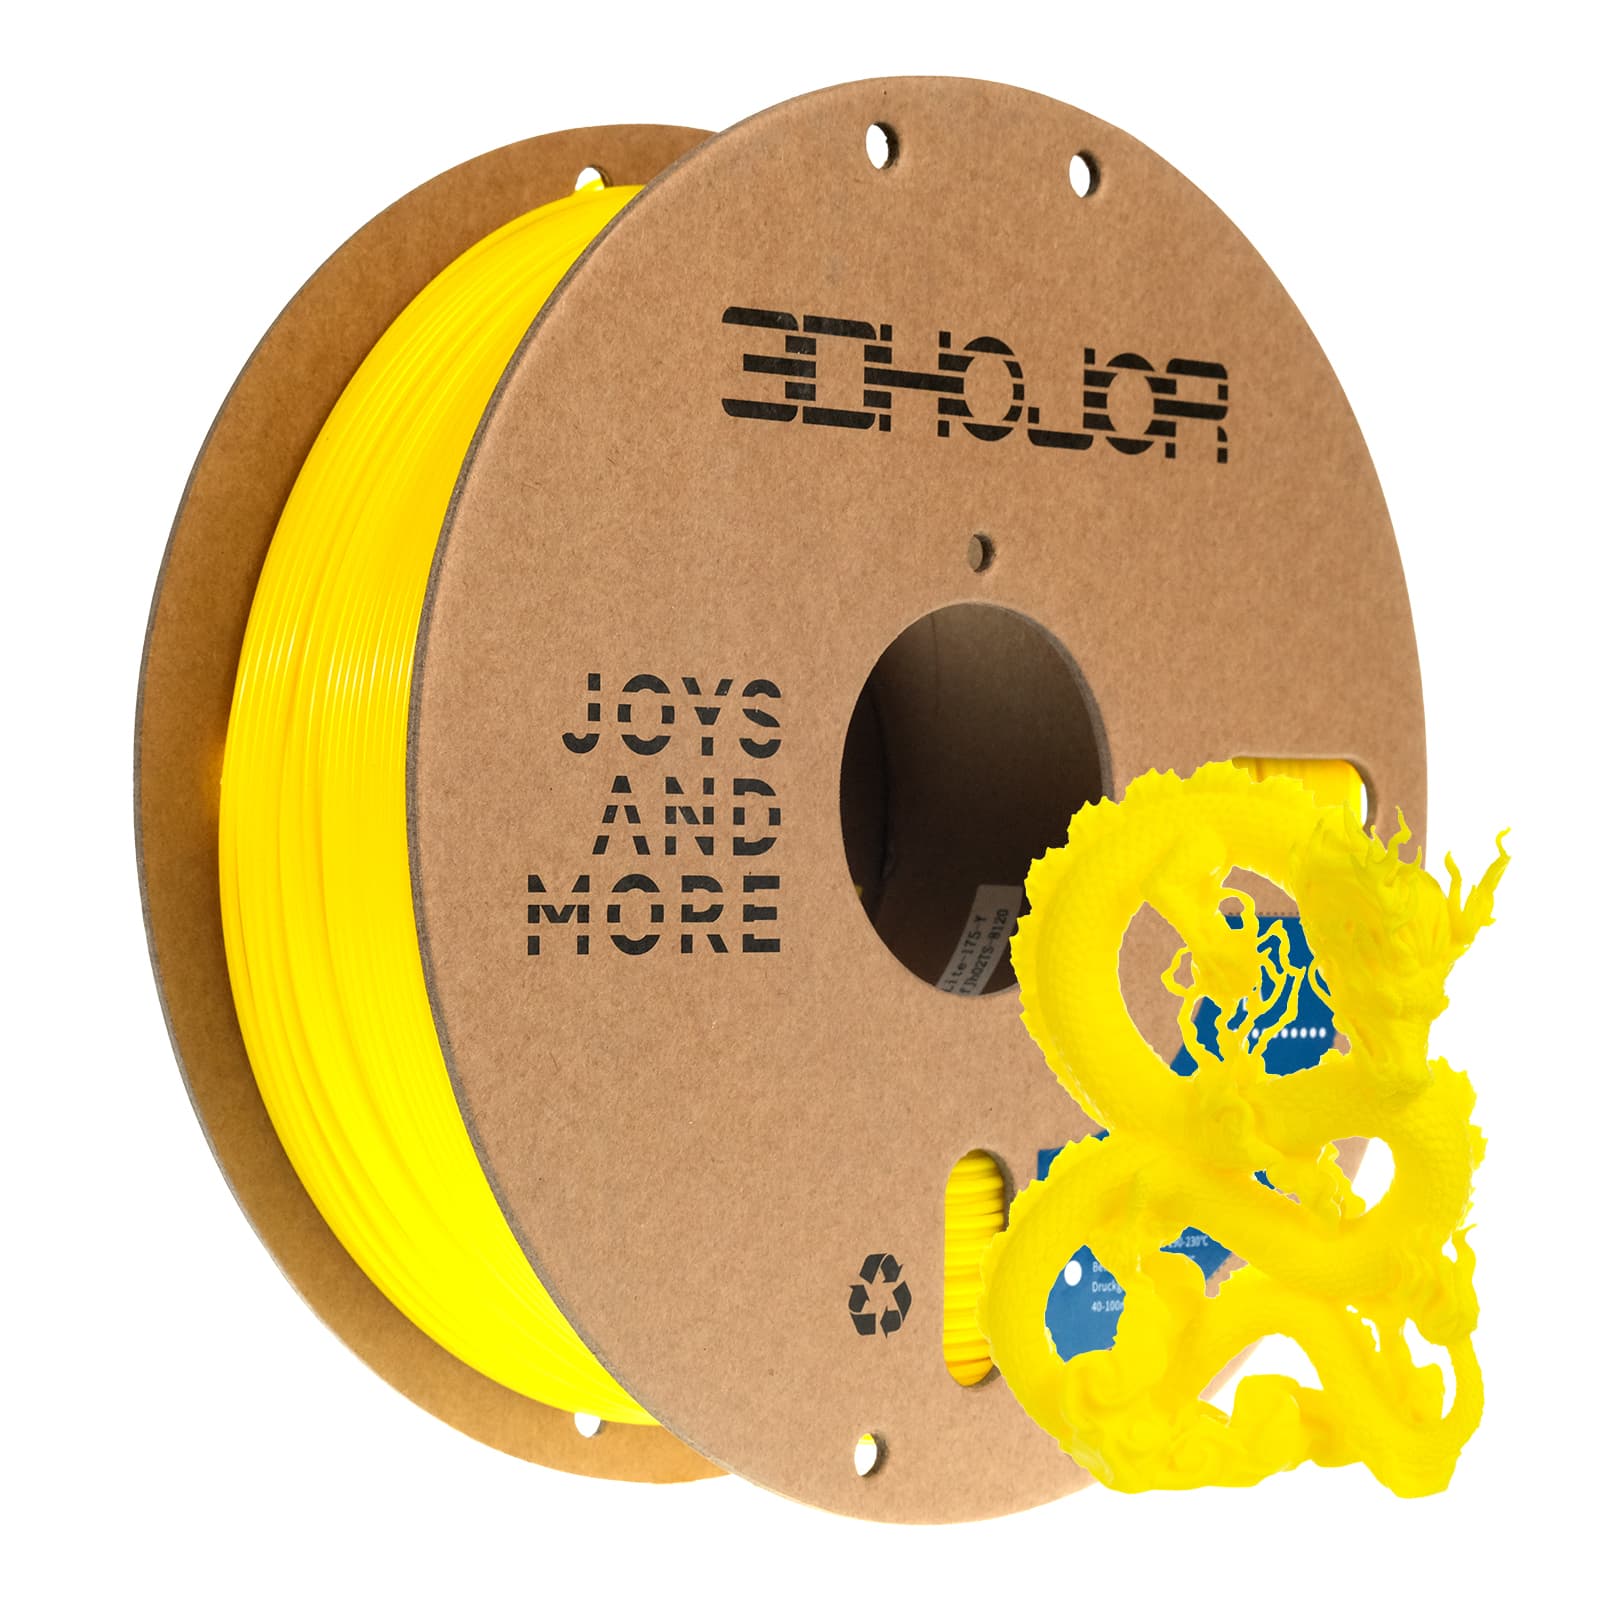 3DHoJor PLA Filament 1.75mm,3D Printer Filament,1kg Cardboard Spool (2.2lbs), Fit Most 3D FDM Printer,Yellow